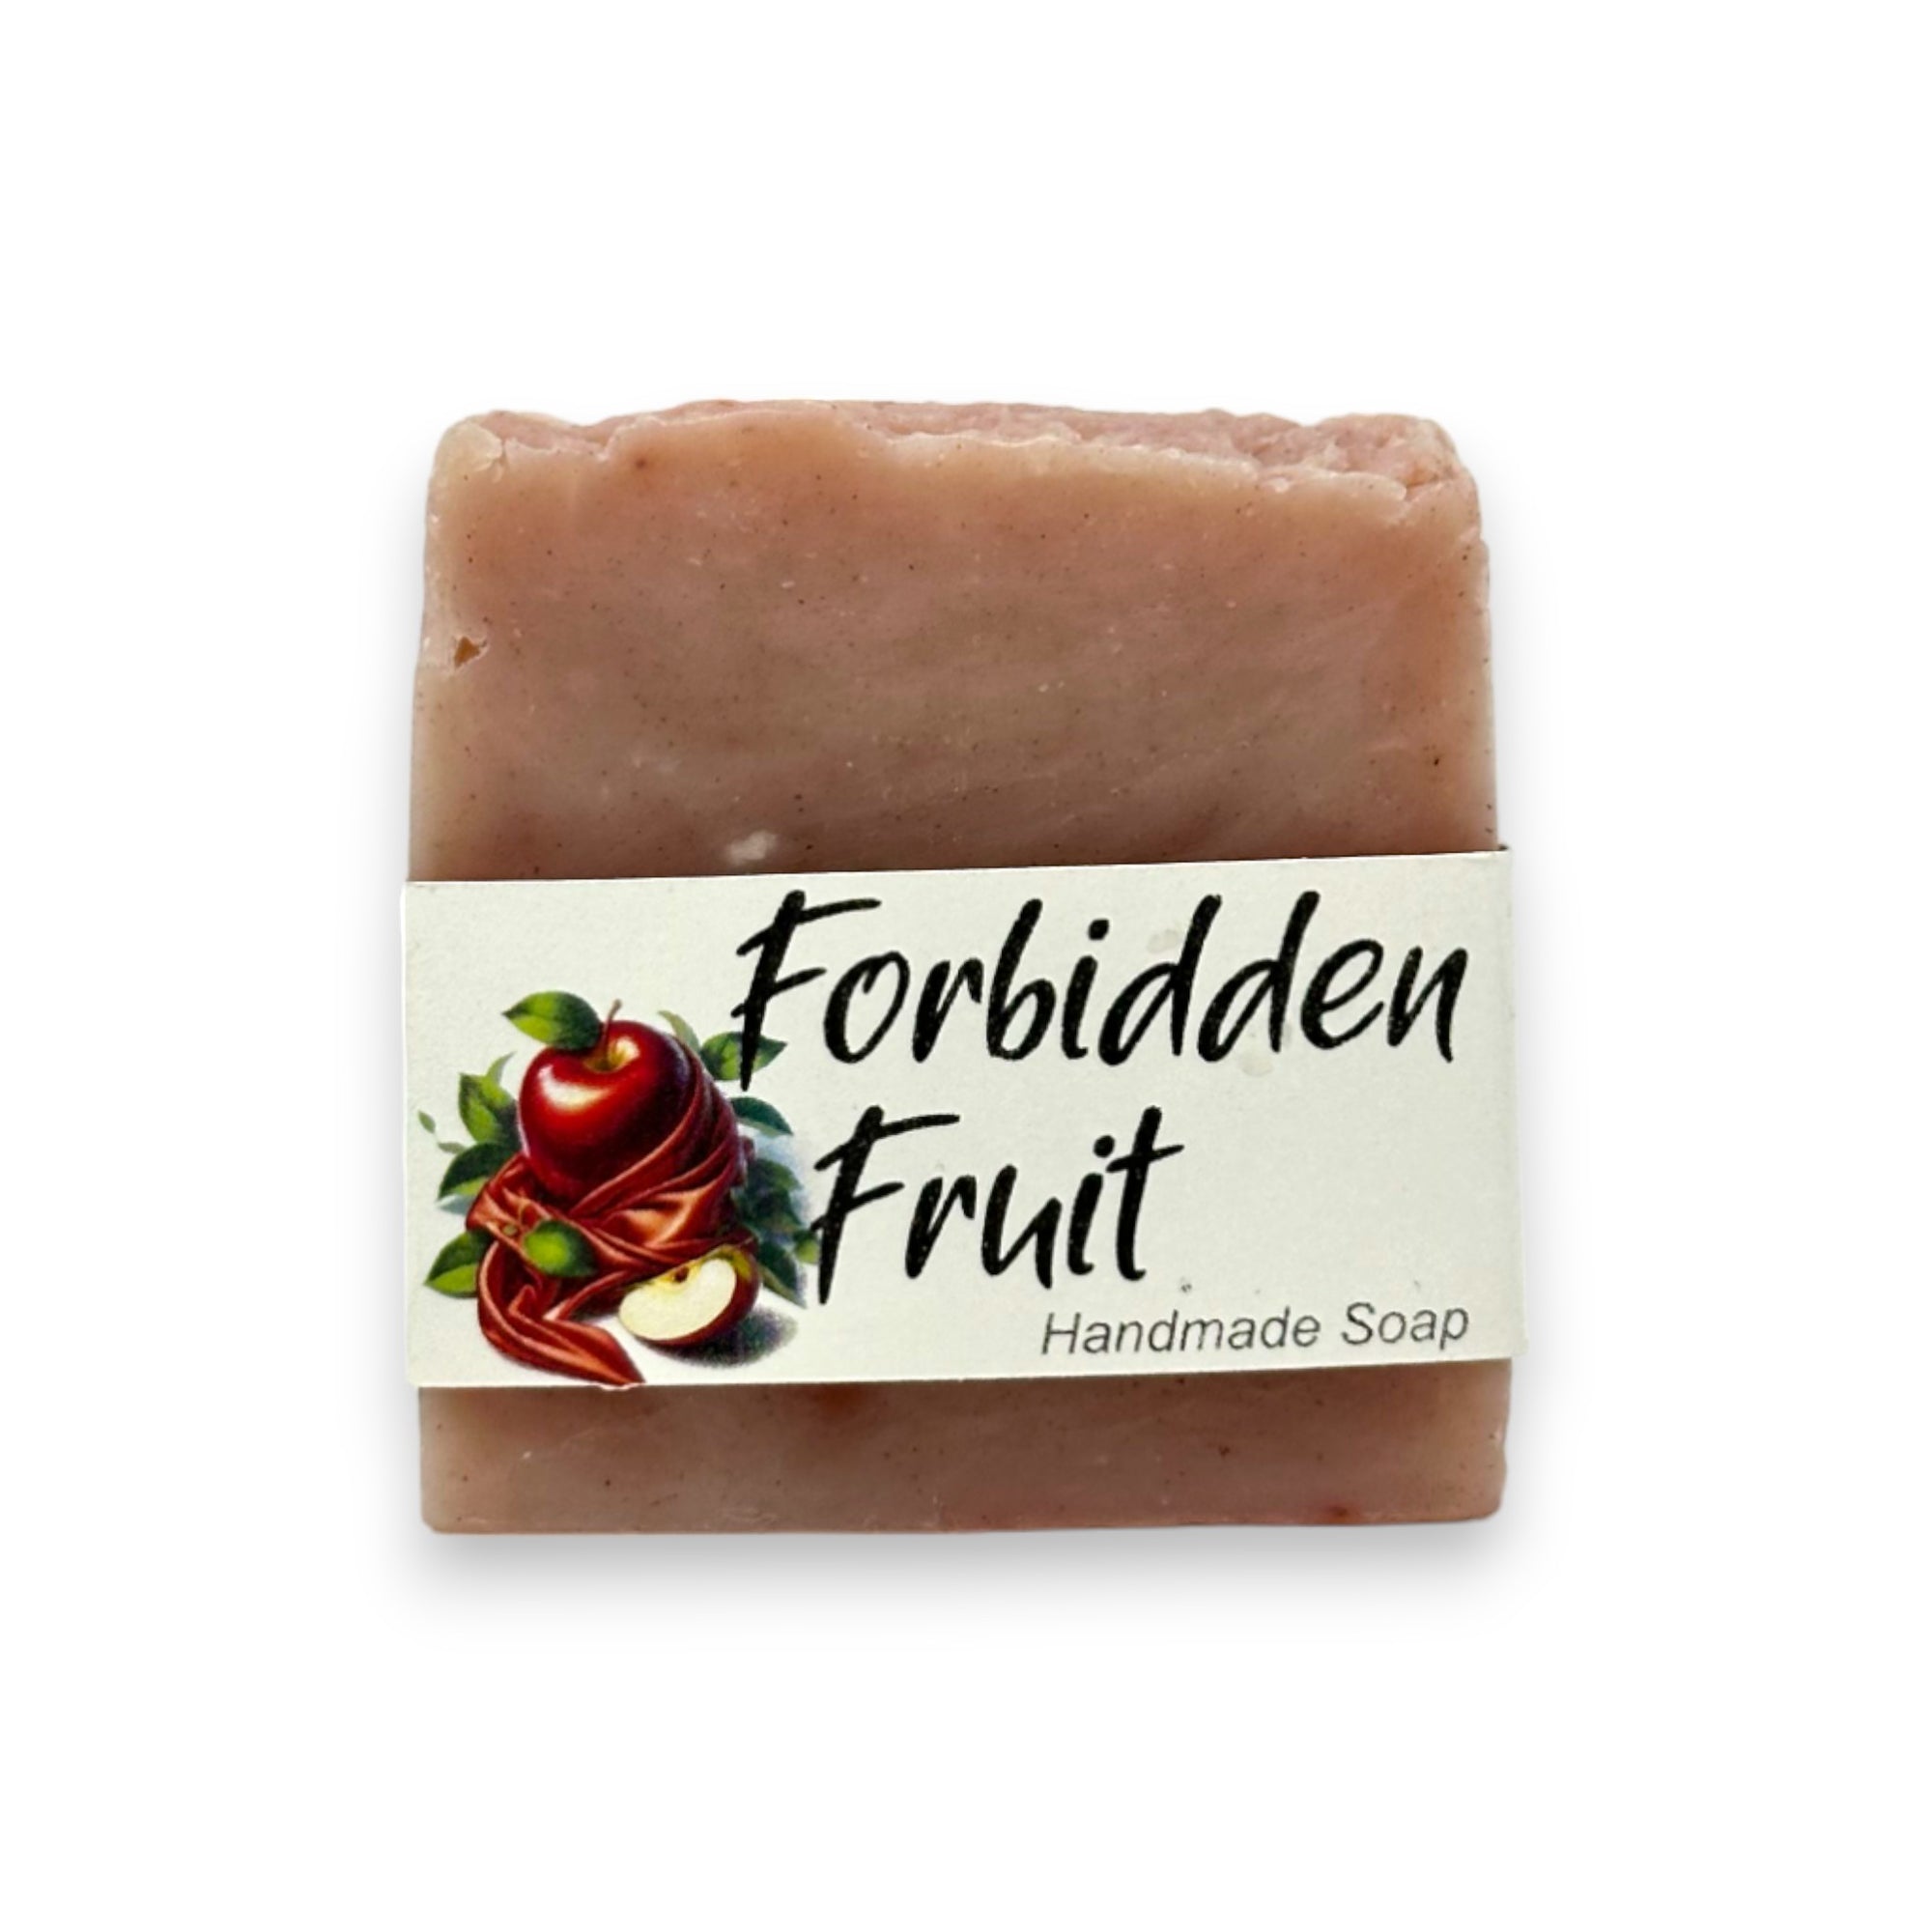 "Forbidden Fruit" Fresh Cut Apple Handmade Soap